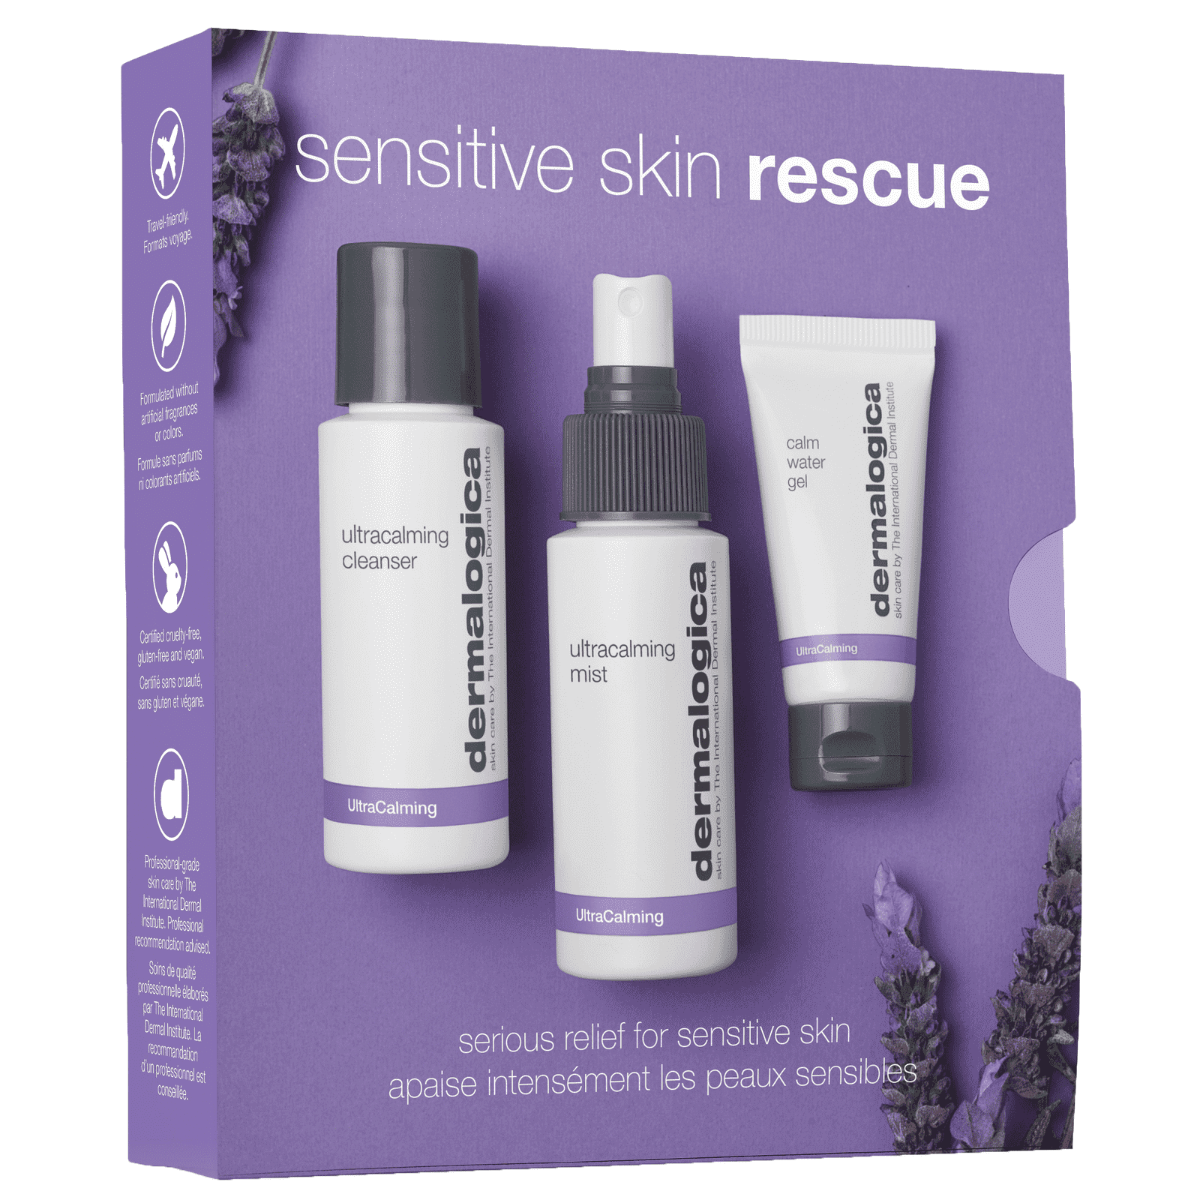 Dermalogica - UltraCalming - Sensitive Skin Rescue Kit